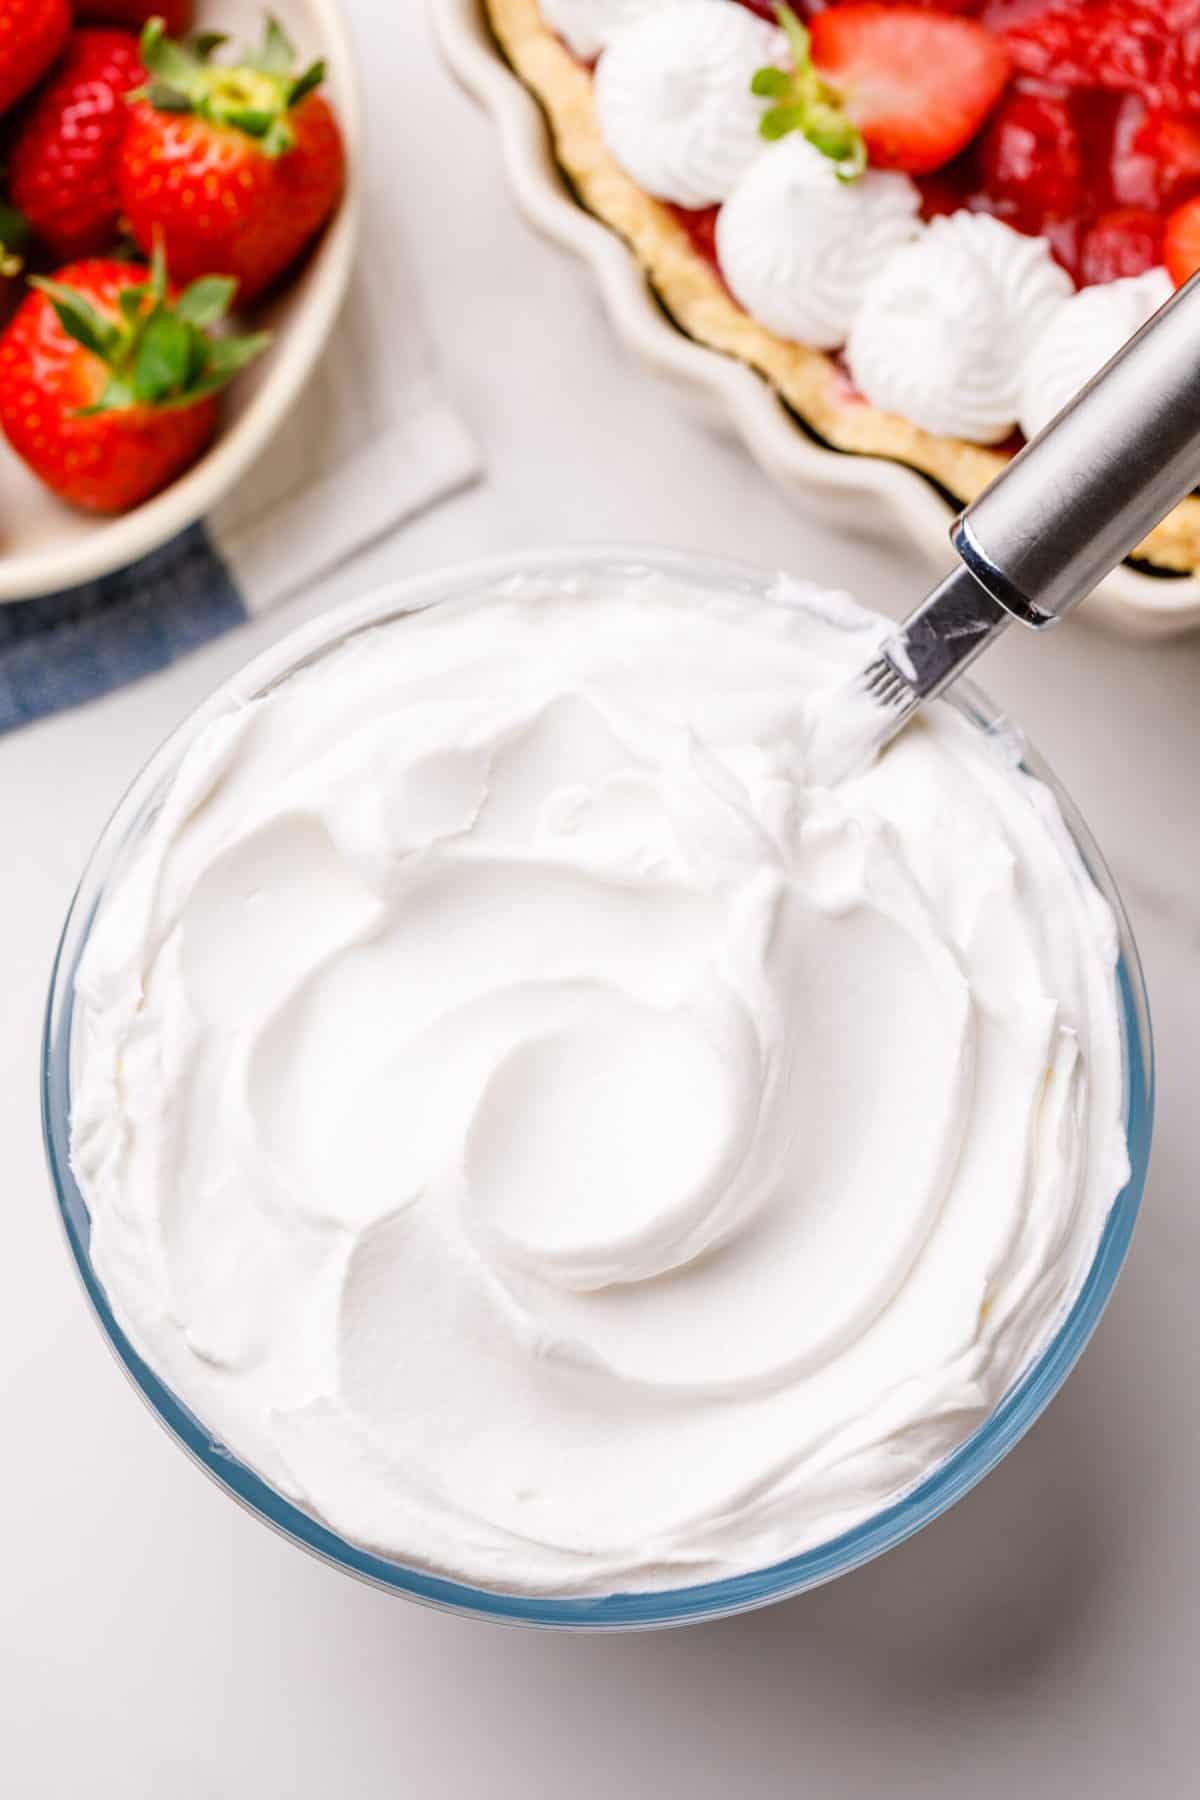 whipped cream aka chantilly cream in a glass bowl